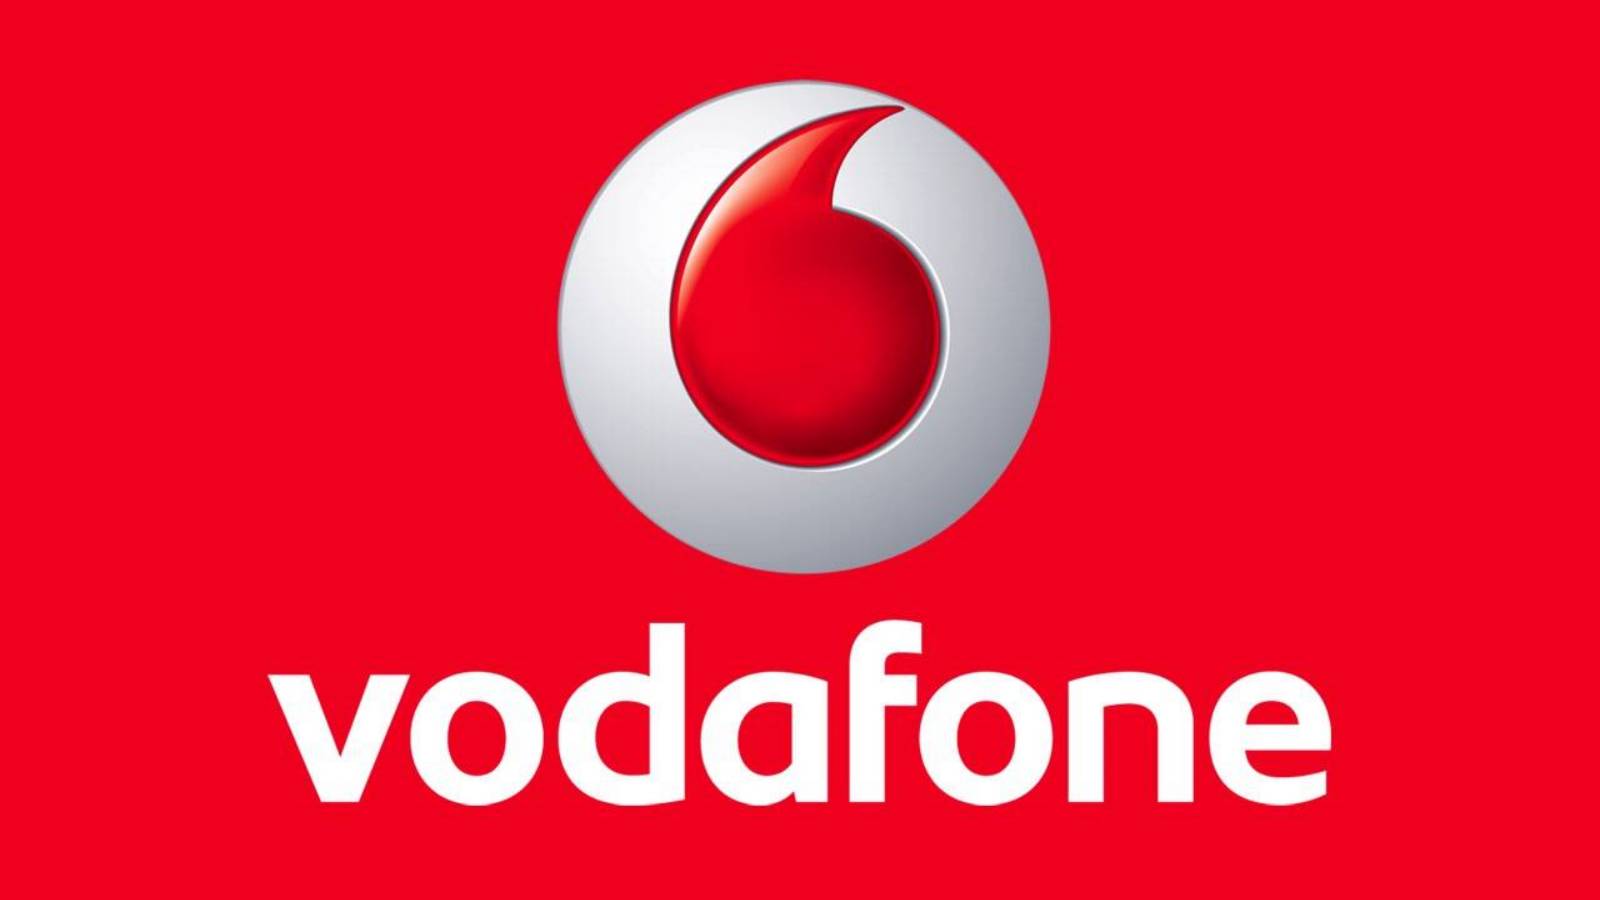 Vodafone Official GRATIS MILIONI di clienti rumeni